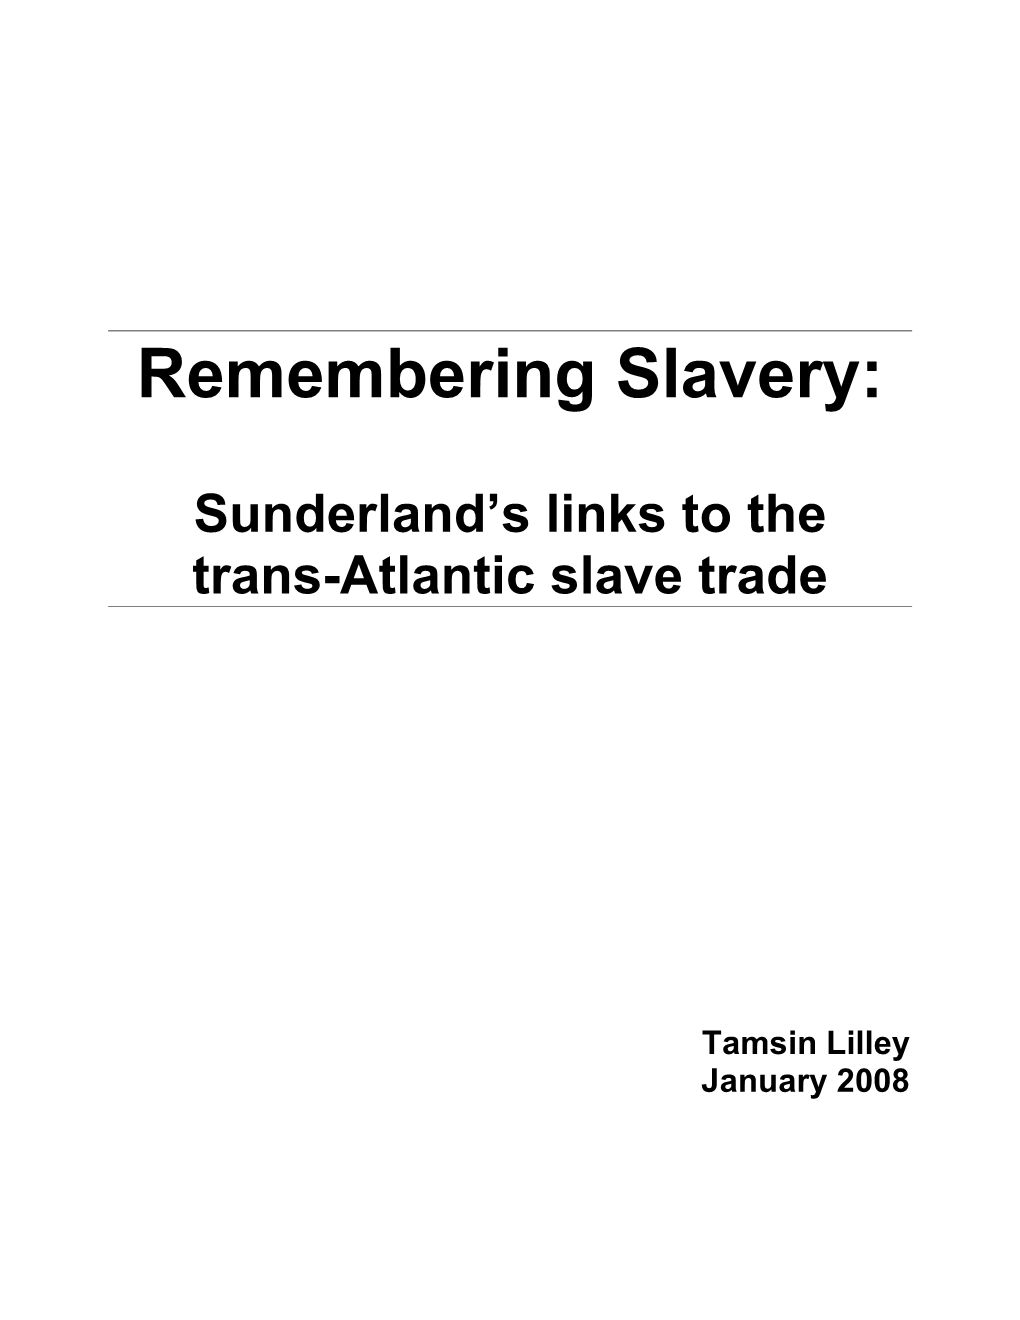 Sunderland's Links to the Trans-Atlantic Slave Trade